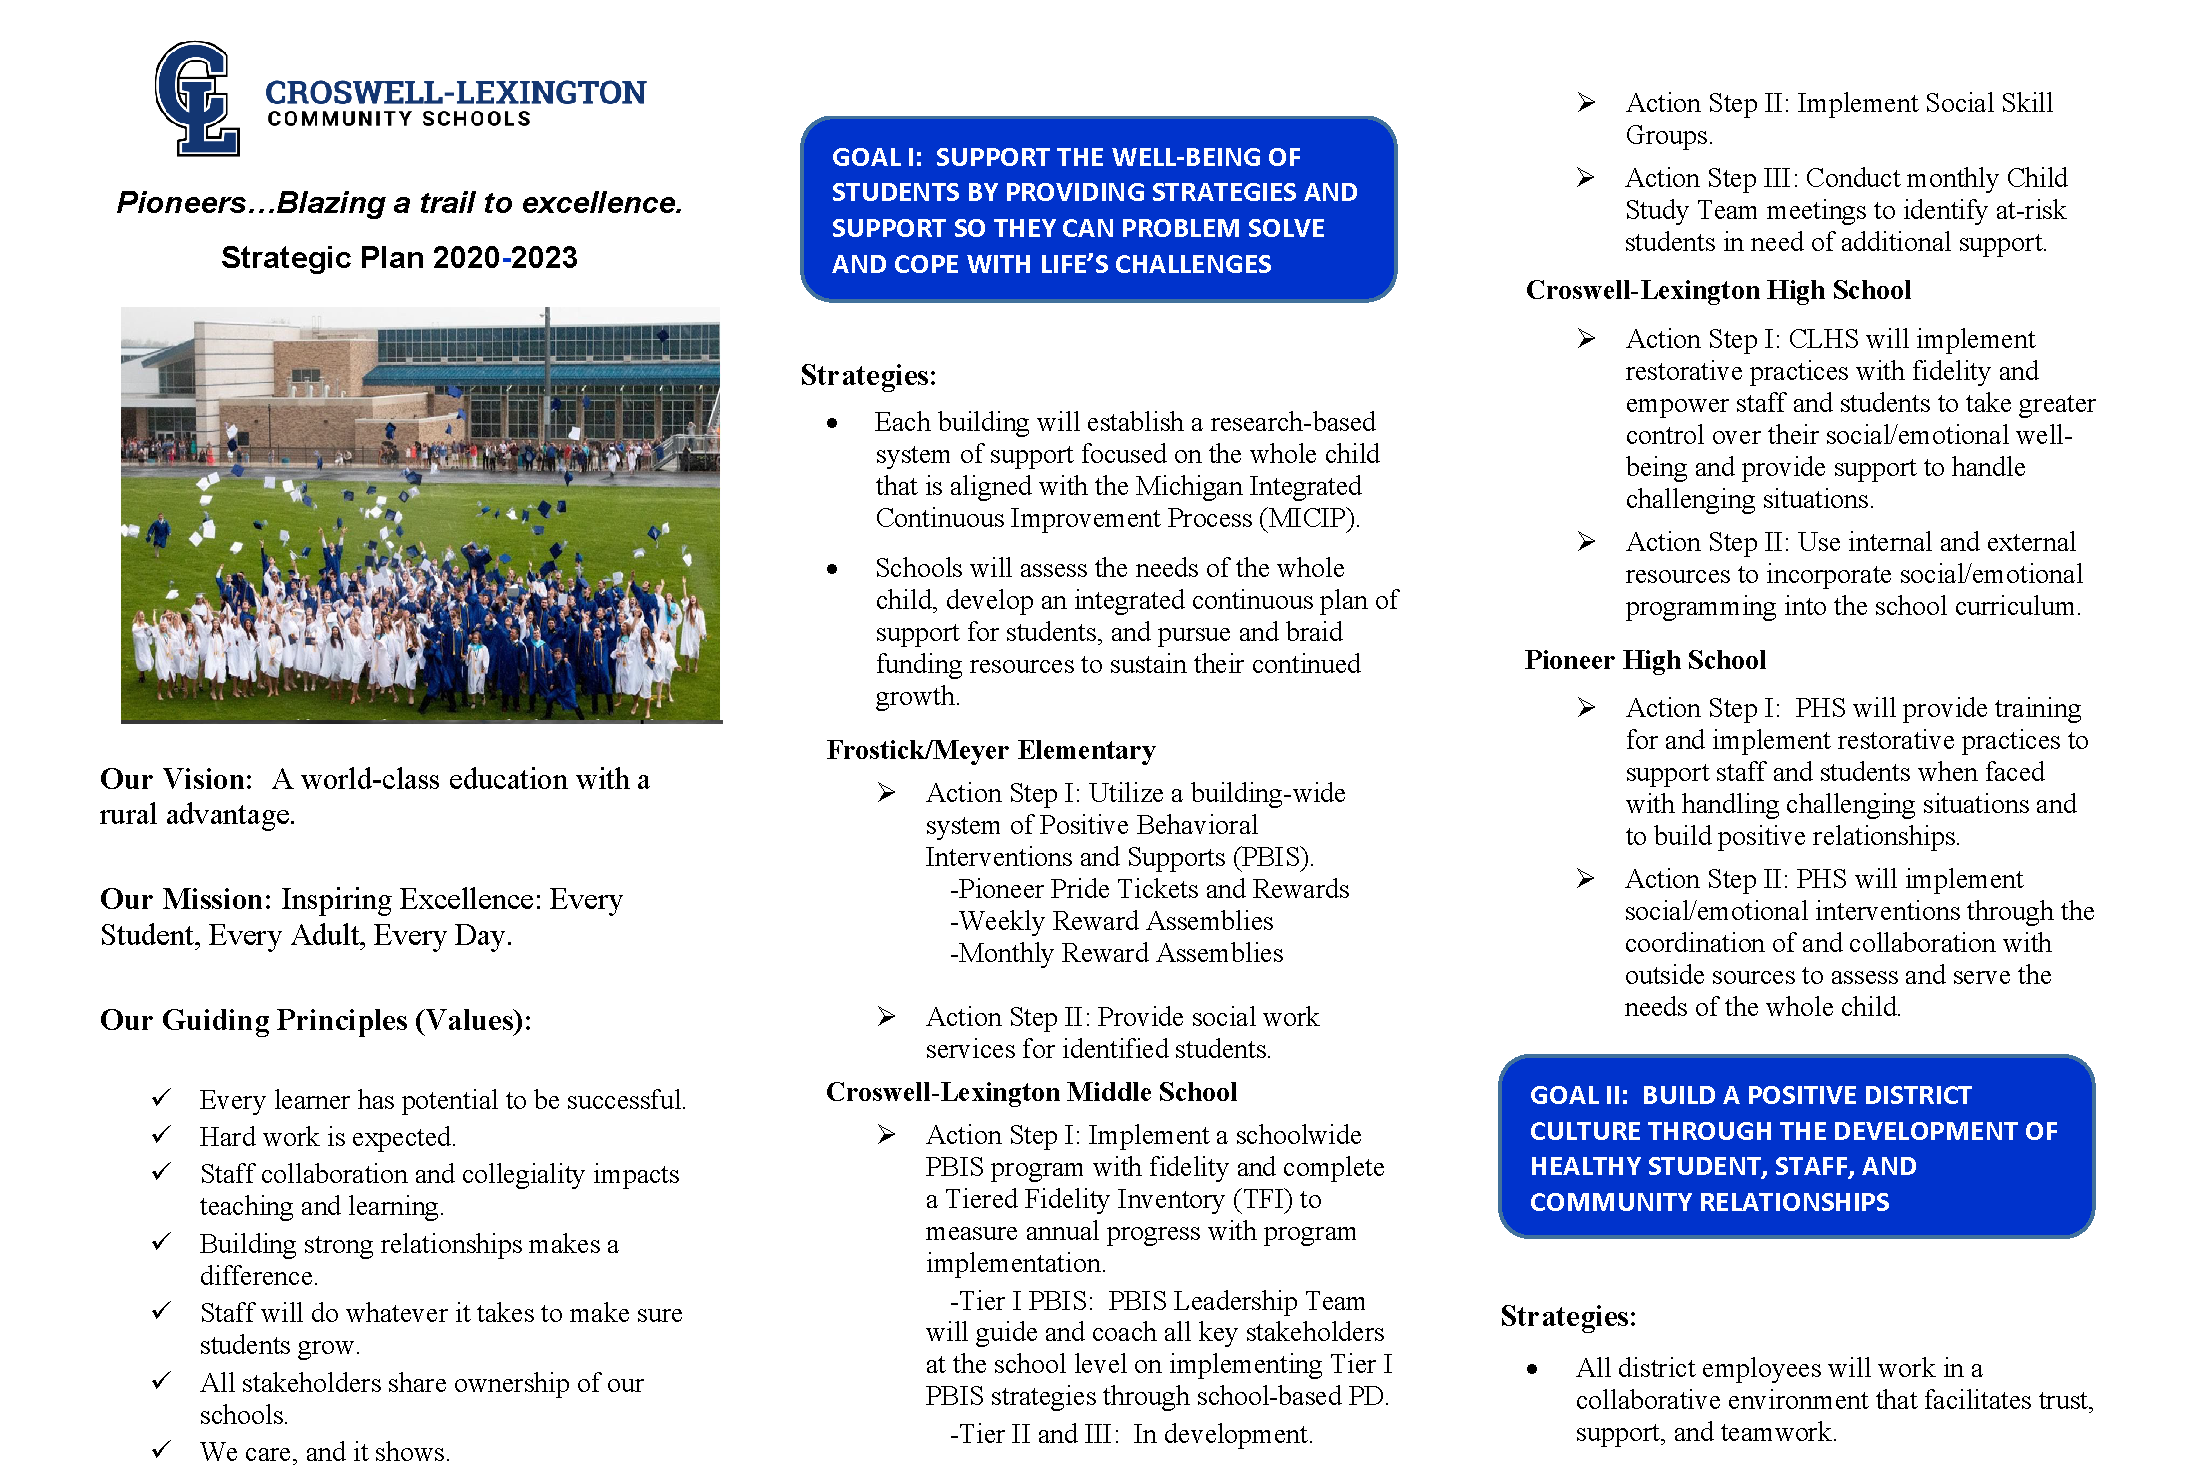 Strategic Plan | Croswell-Lexington Community Schools